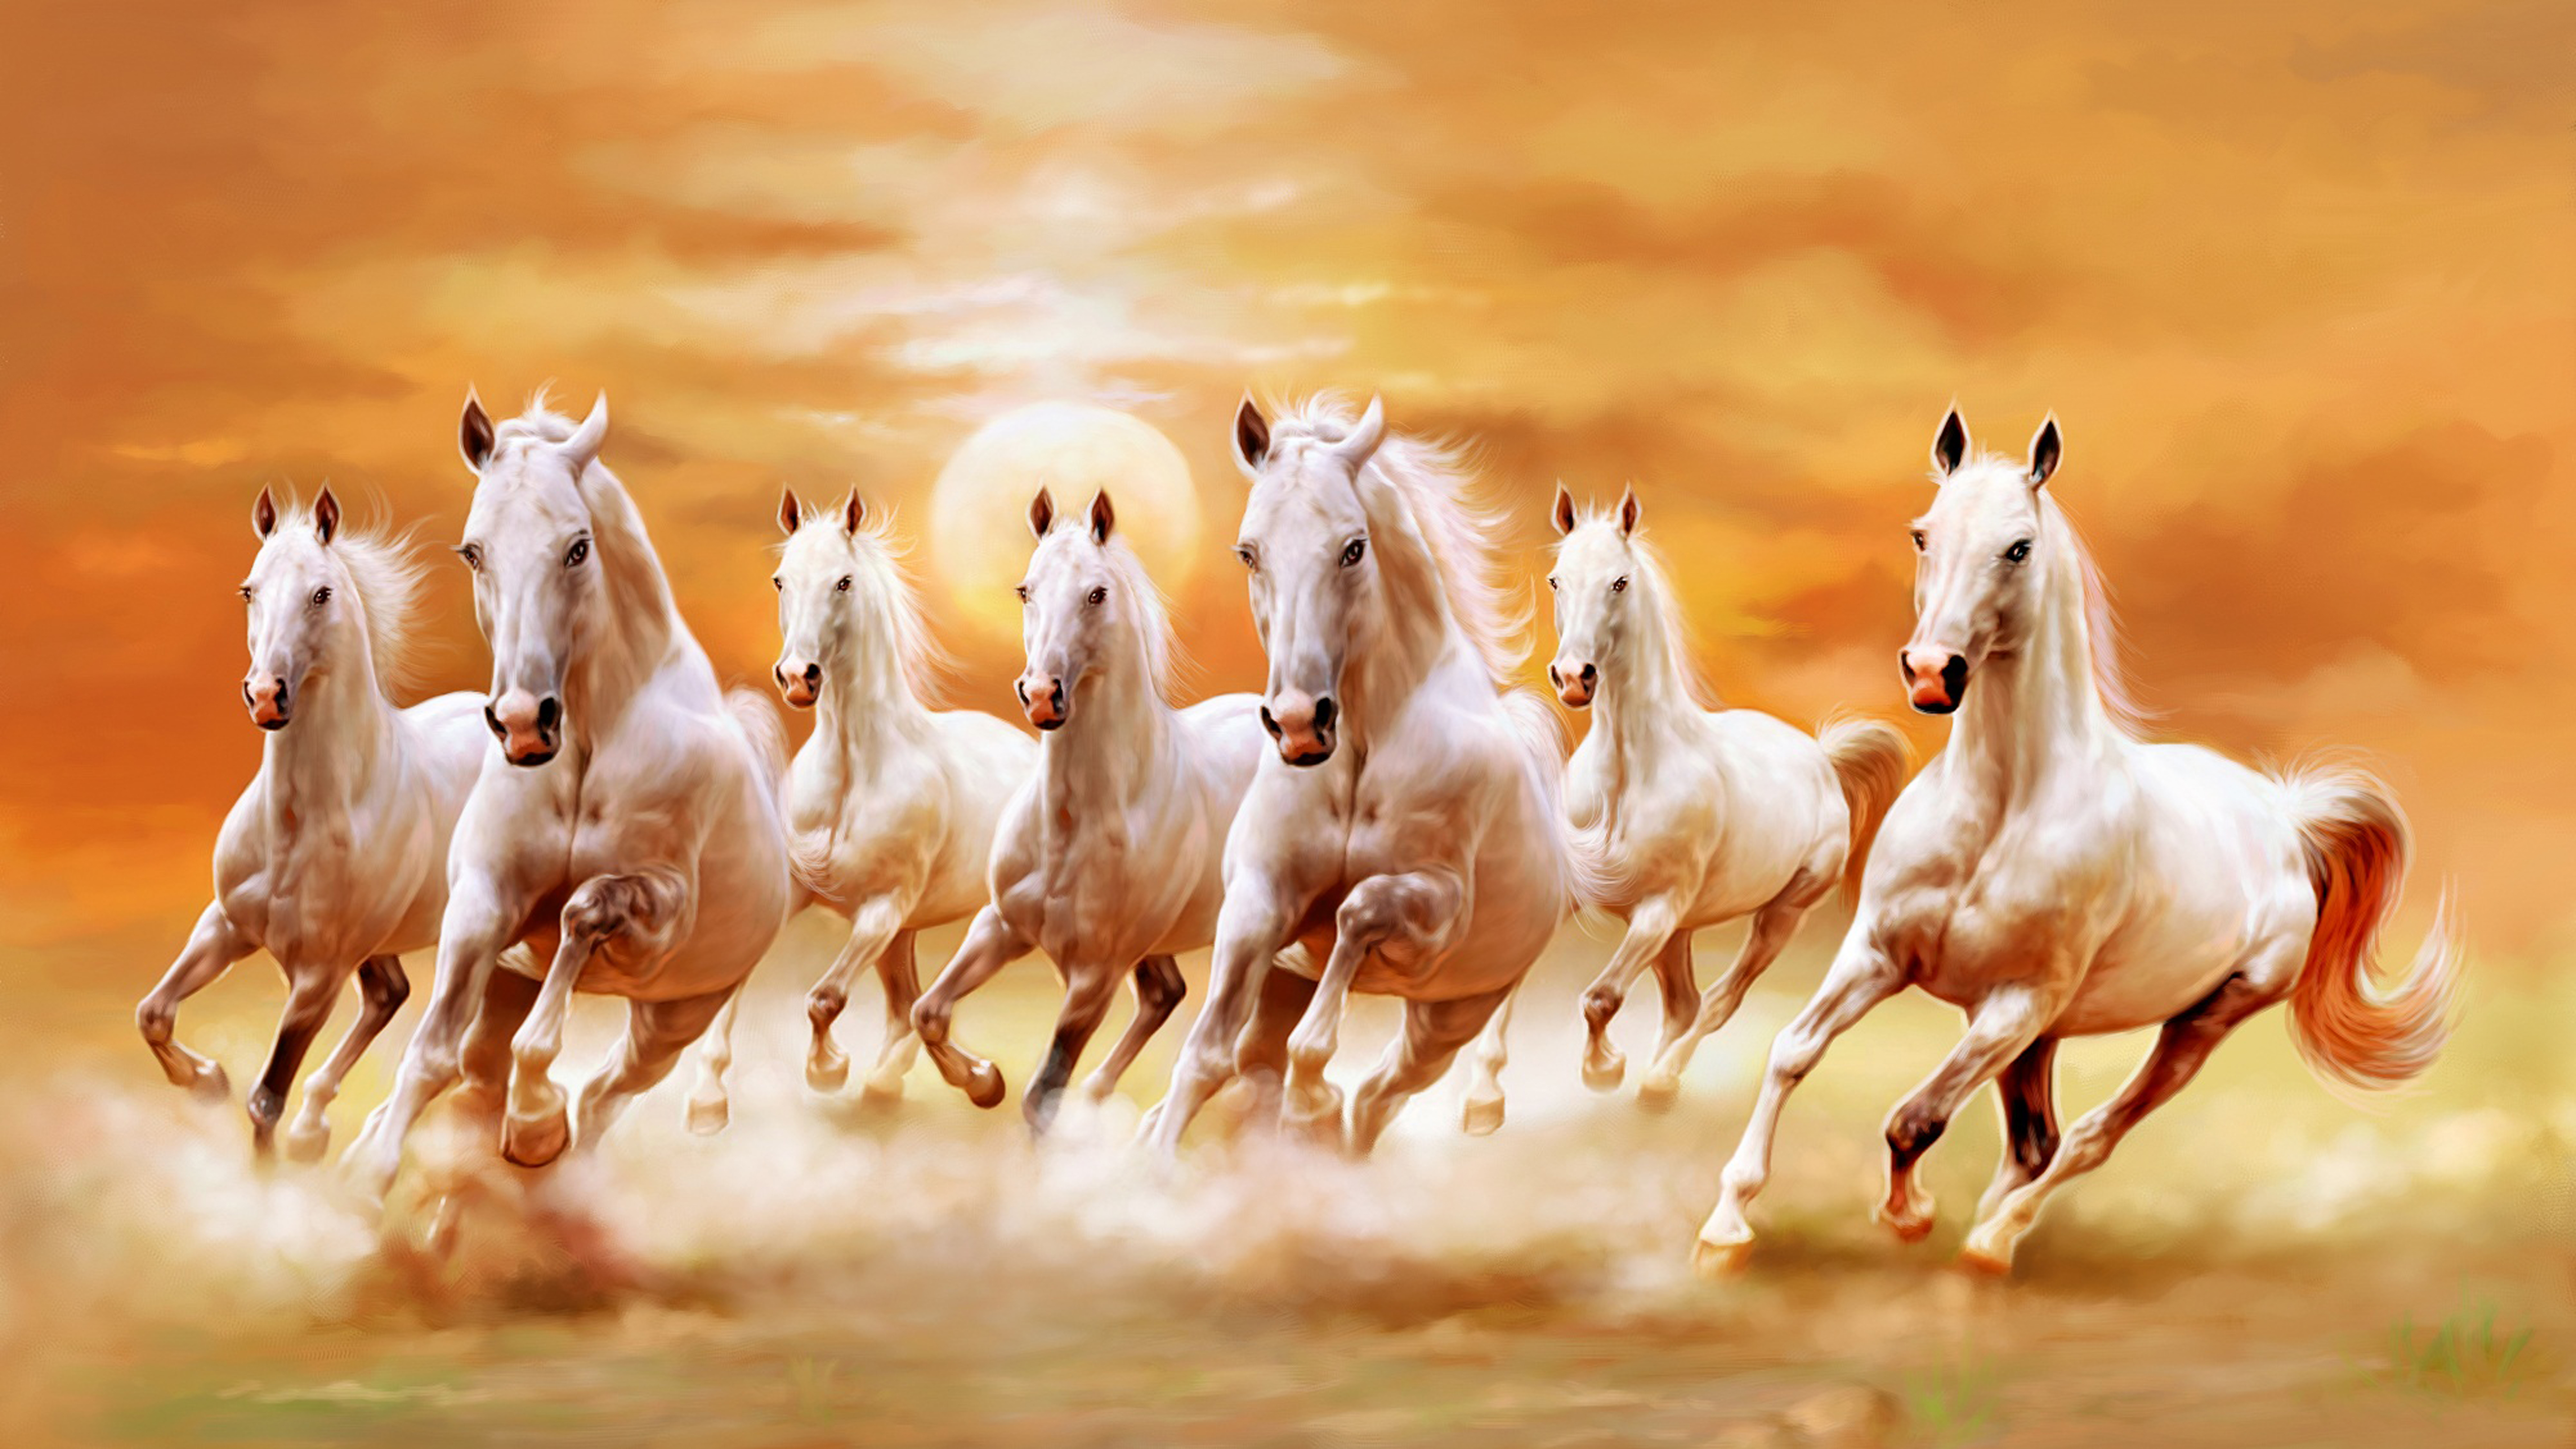 Beautiful White Horses Galloping Orange Sunset Sky Ultra Hd Wallpaper